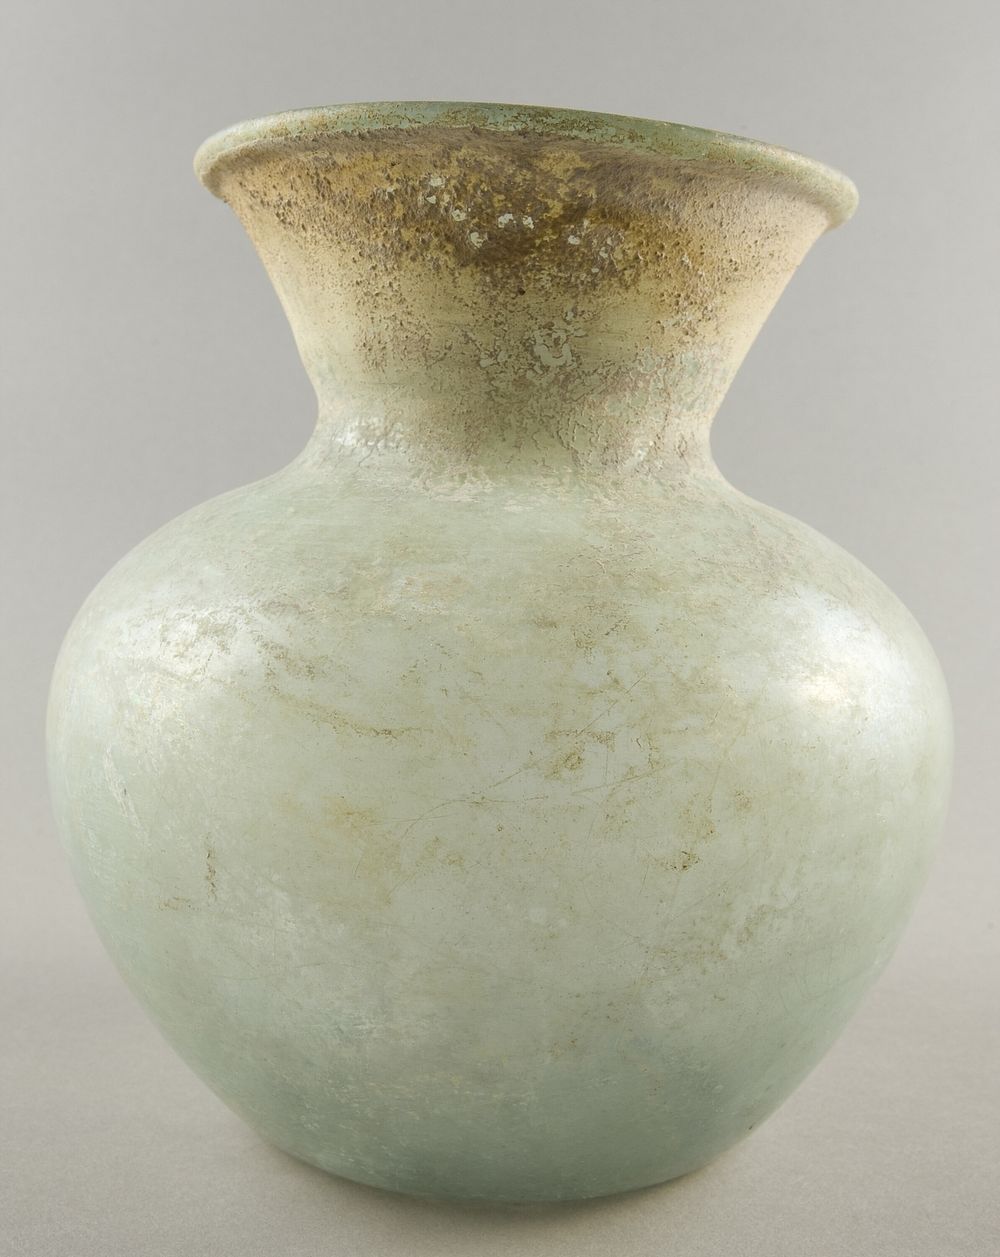 Jar by Ancient Roman